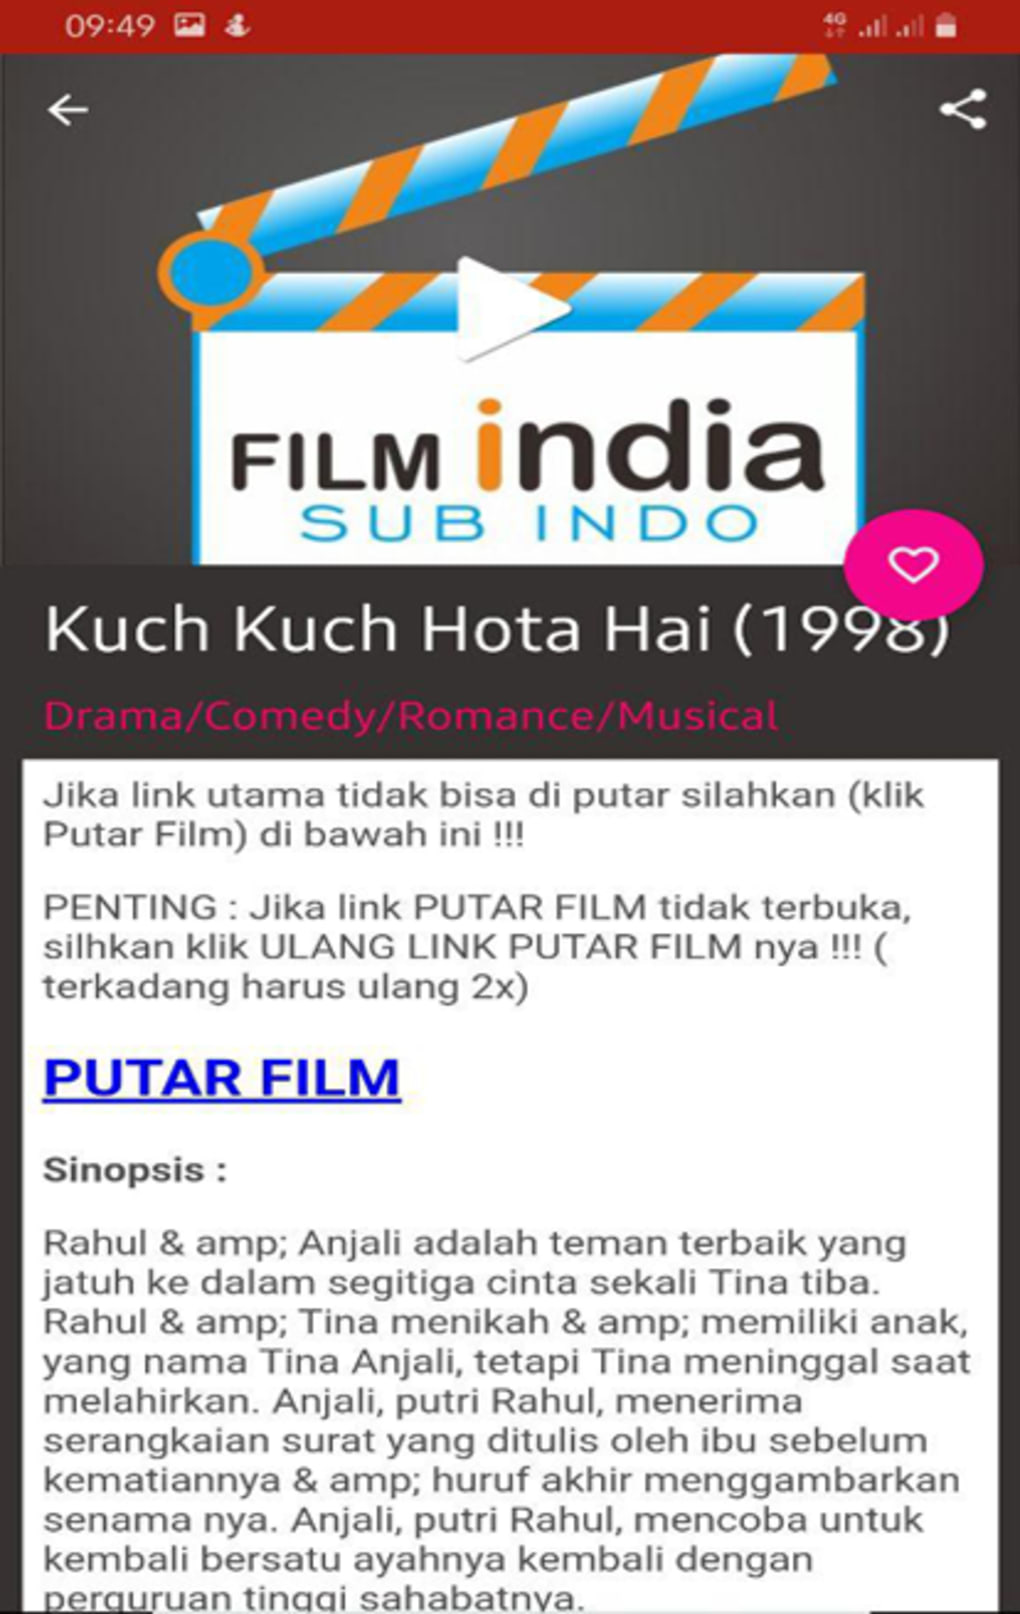 Nonton Film India Sub Indo Para Android Descargar 